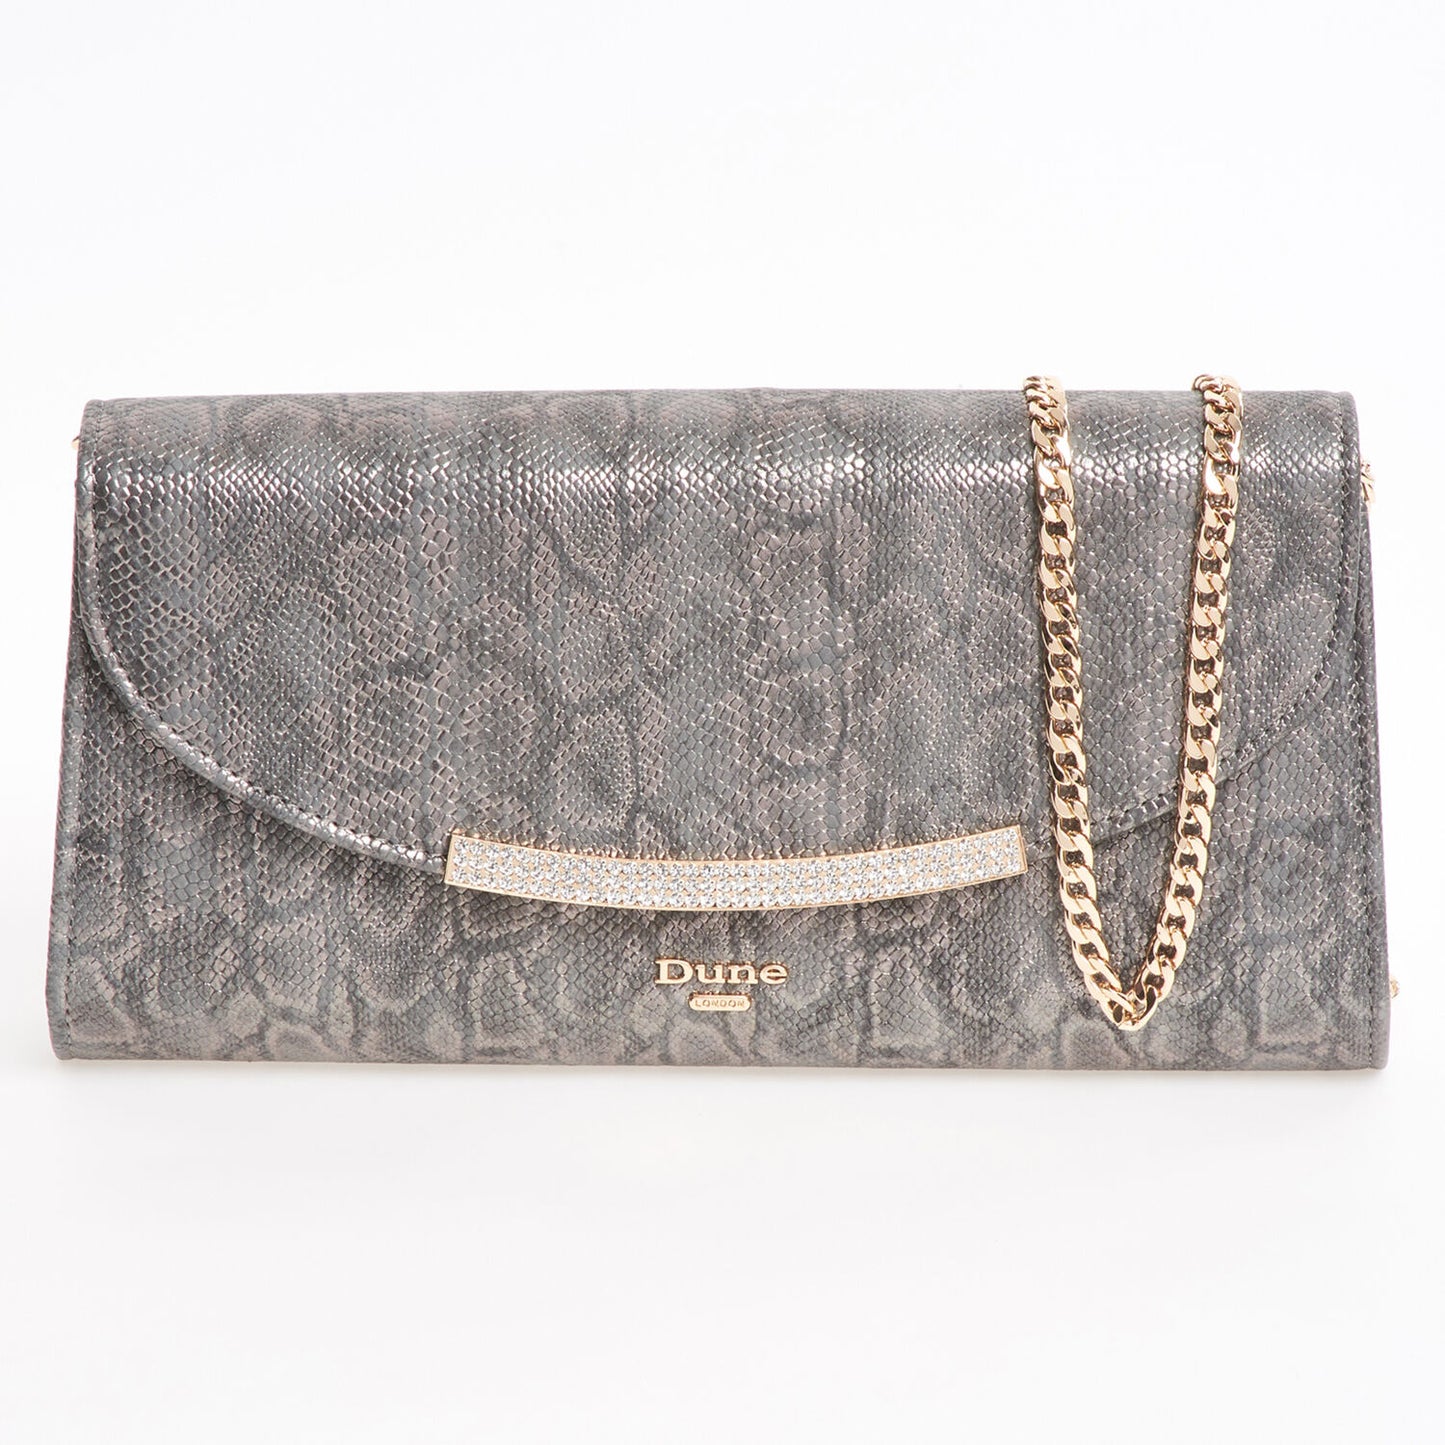 Clutch bag - silver 30947-830: Buy Tamaris Bags online!